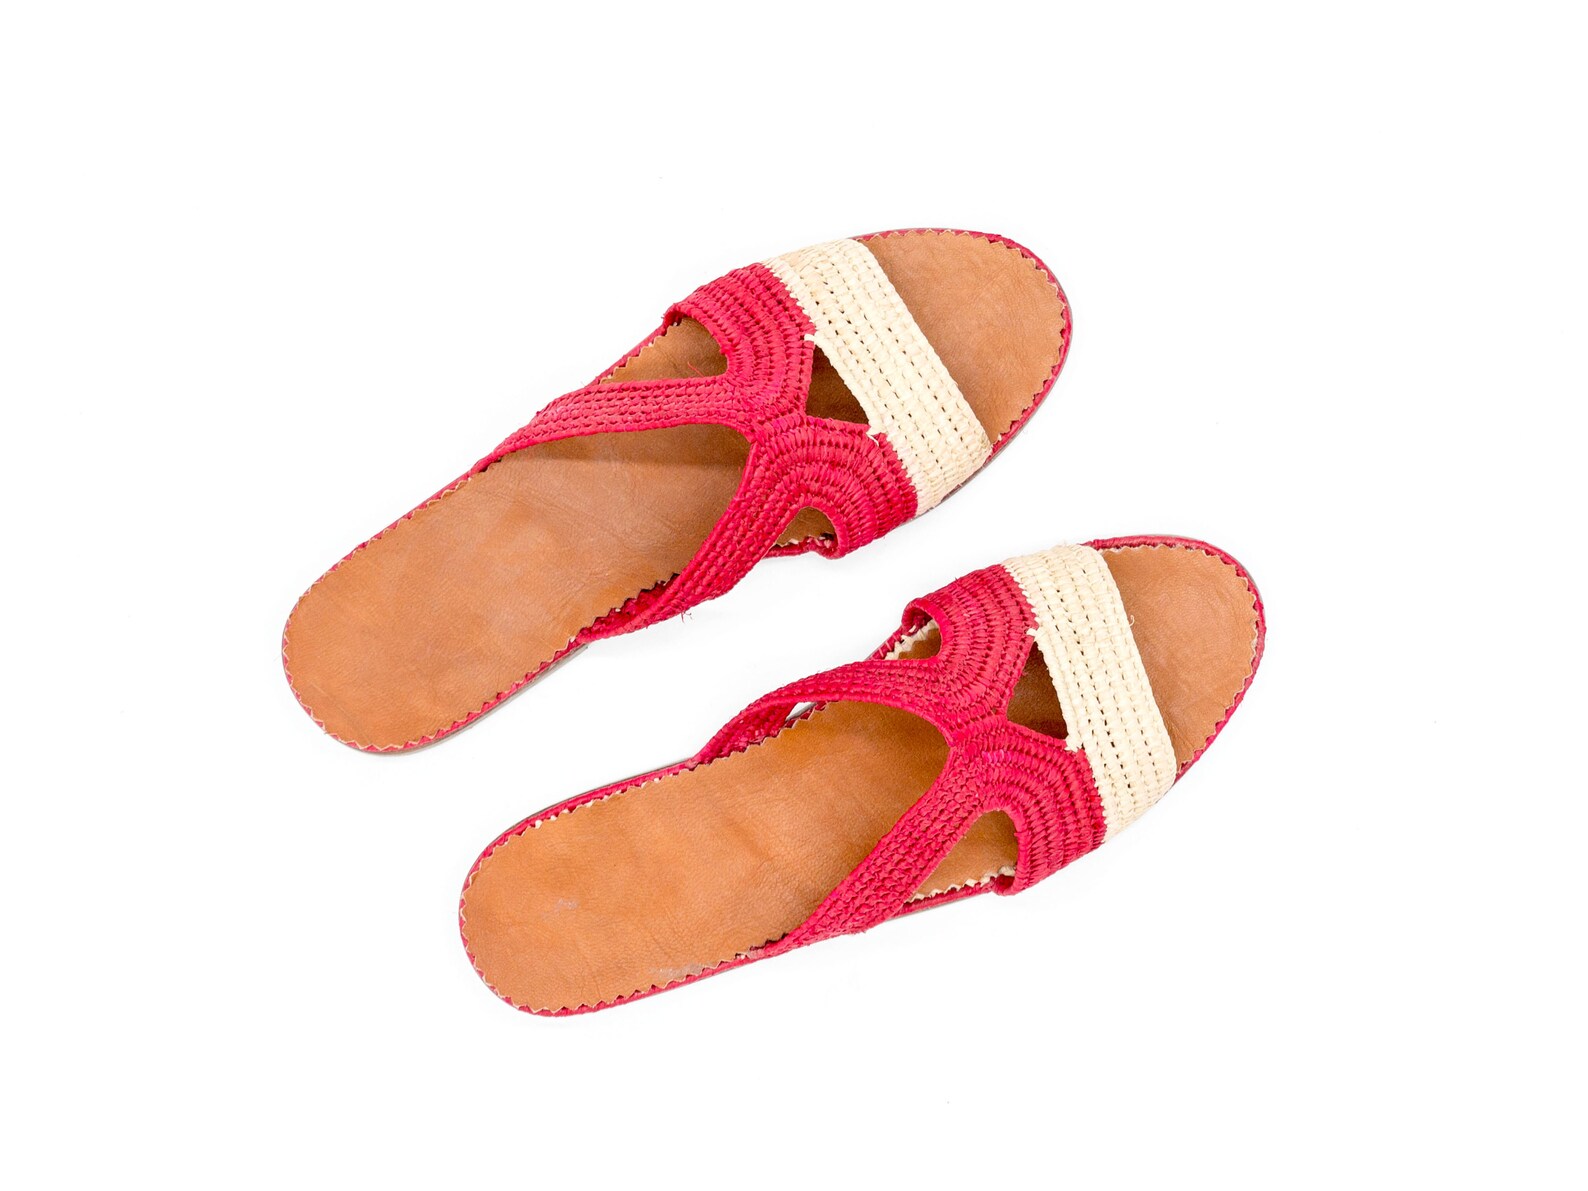 Raffia mules sandals for women